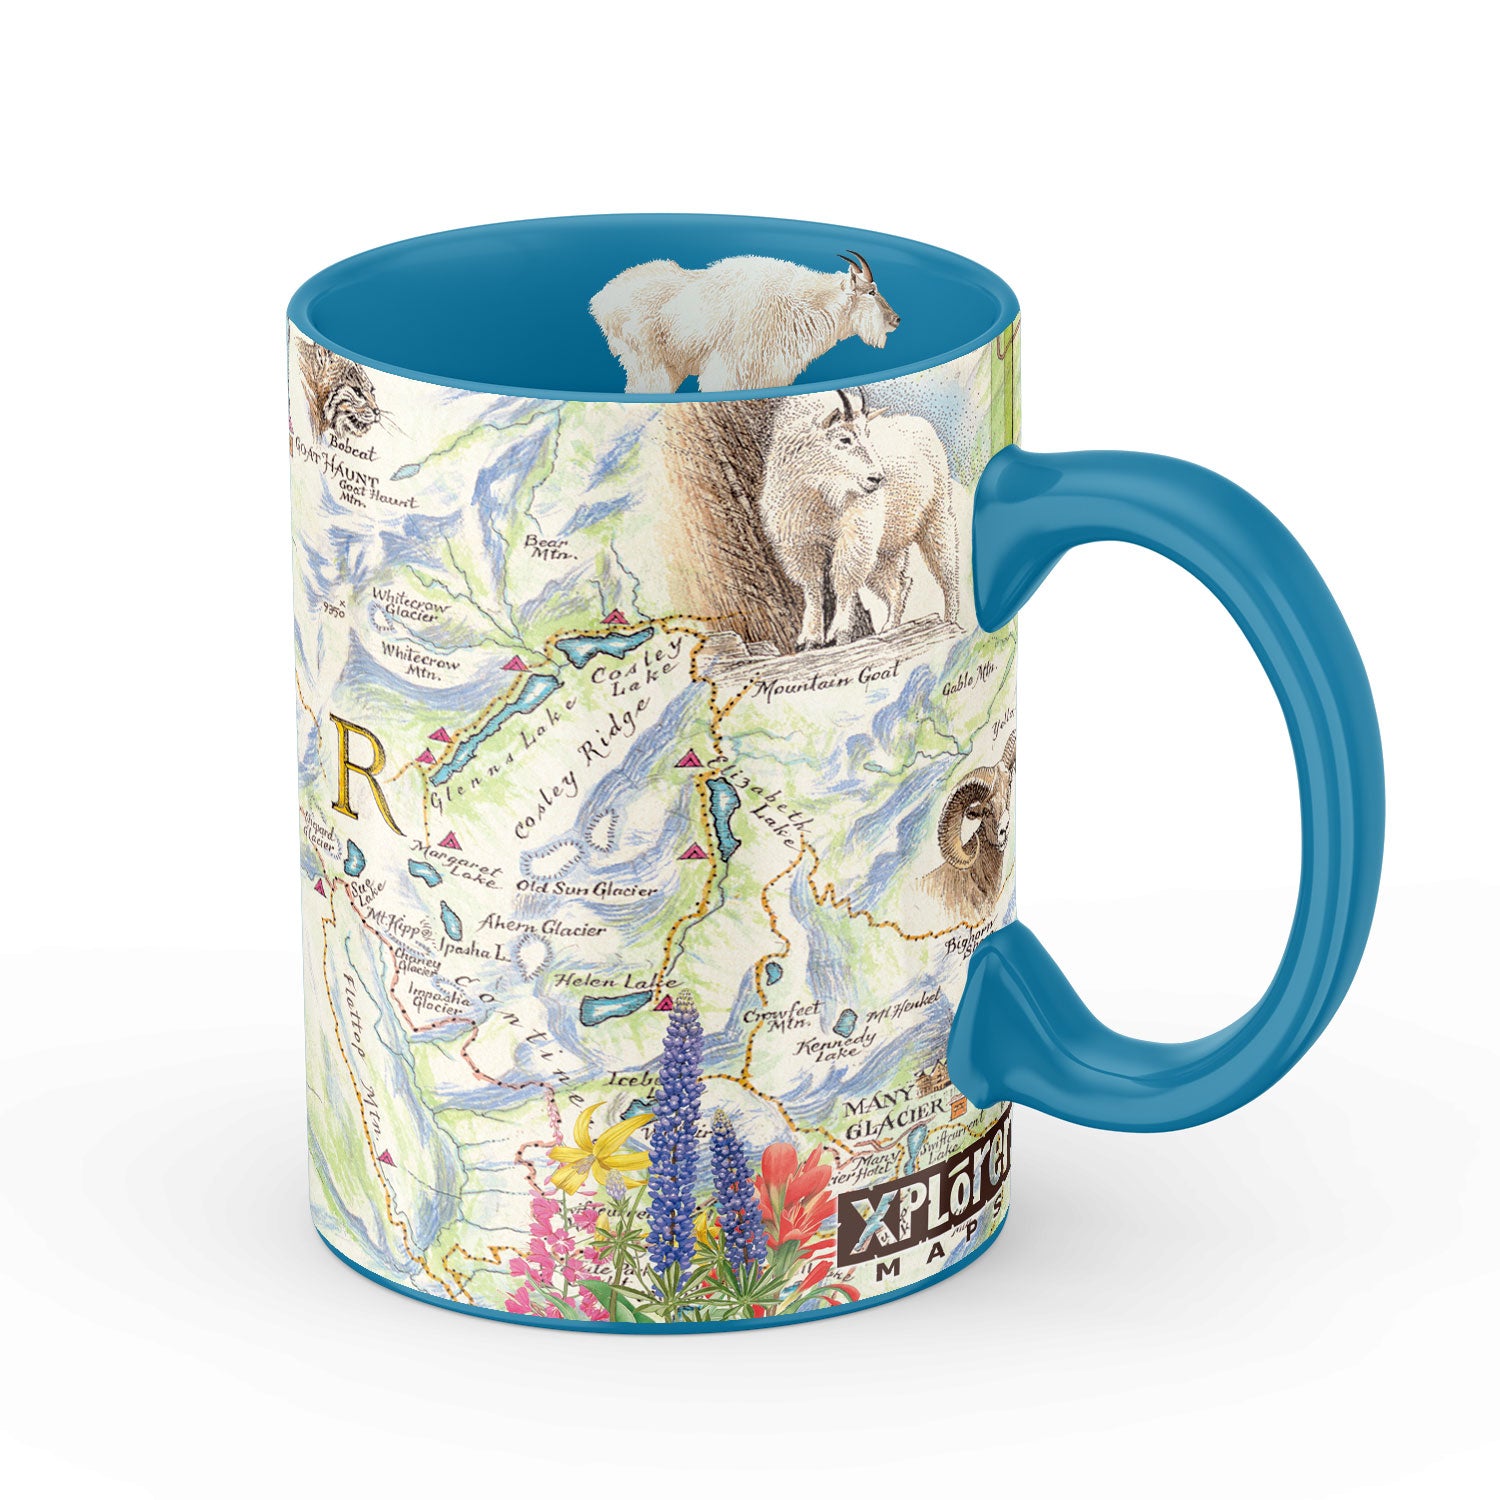 Montana's Glacier National Park Ceramic Coffee Mug featuring mountains, Goats, flowers, and more! Blue - 16 oz.